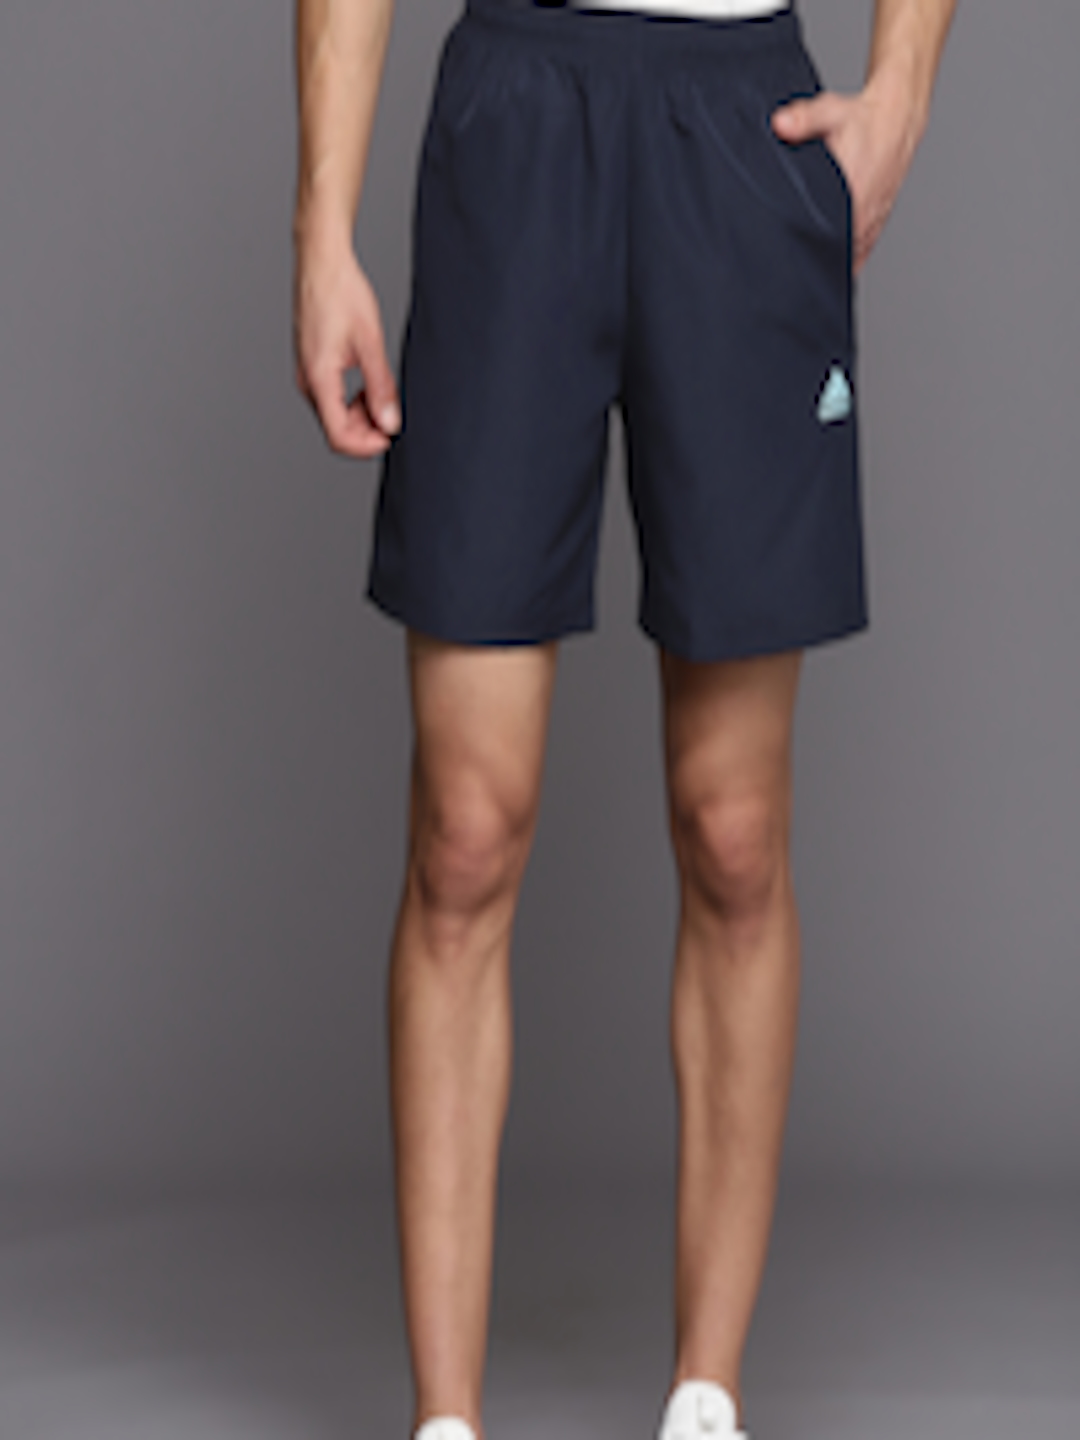 Buy ADIDAS Men Navy Blue Solid Sports Shorts - Shorts for Men 18153518 ...